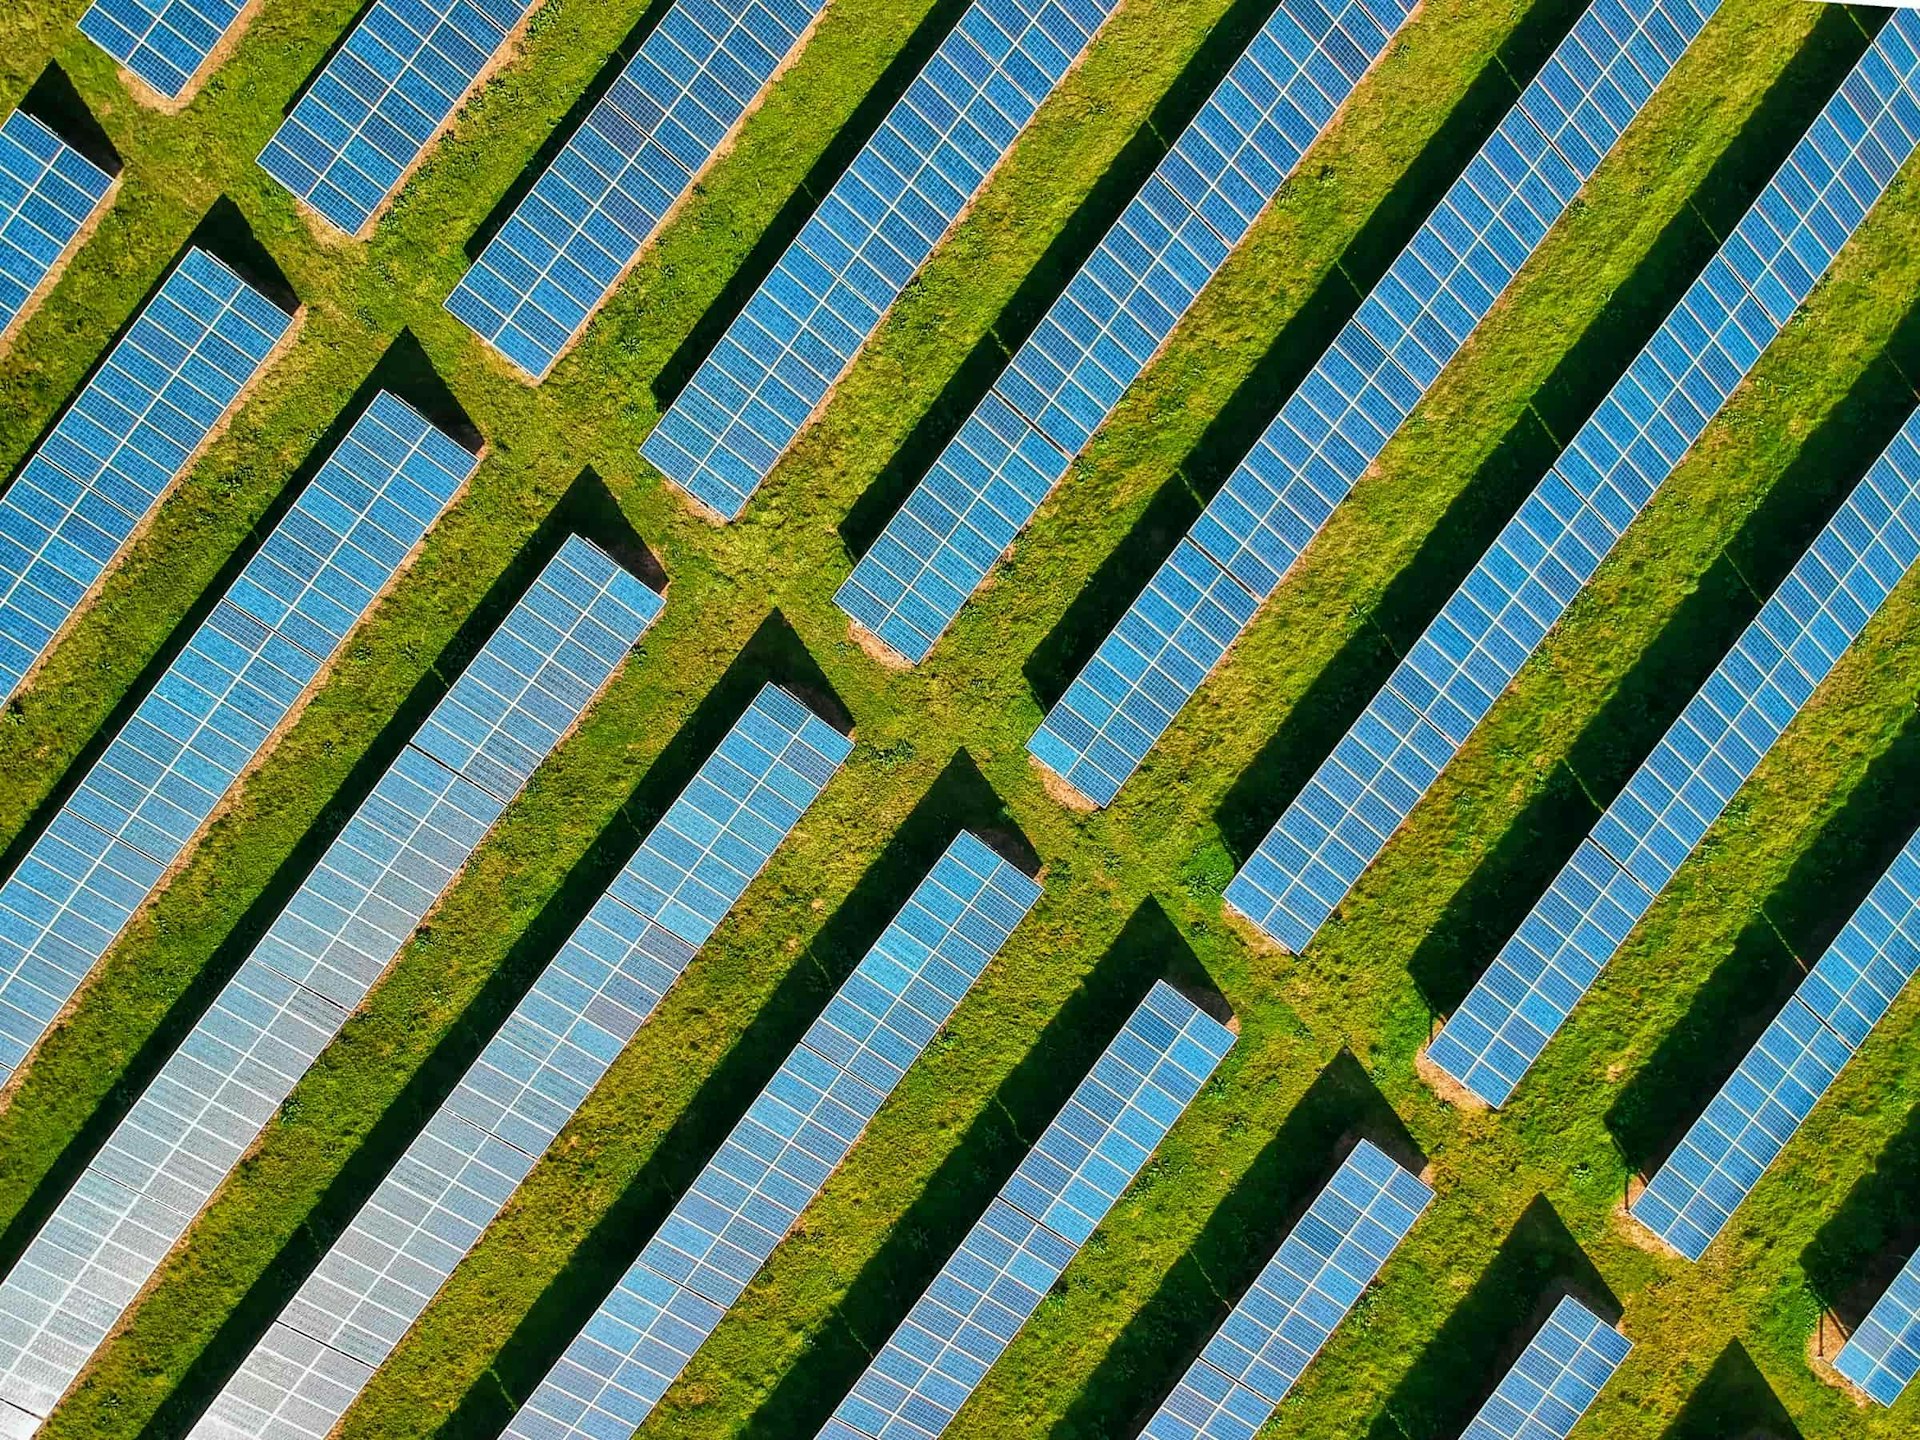 A field of solar panels.